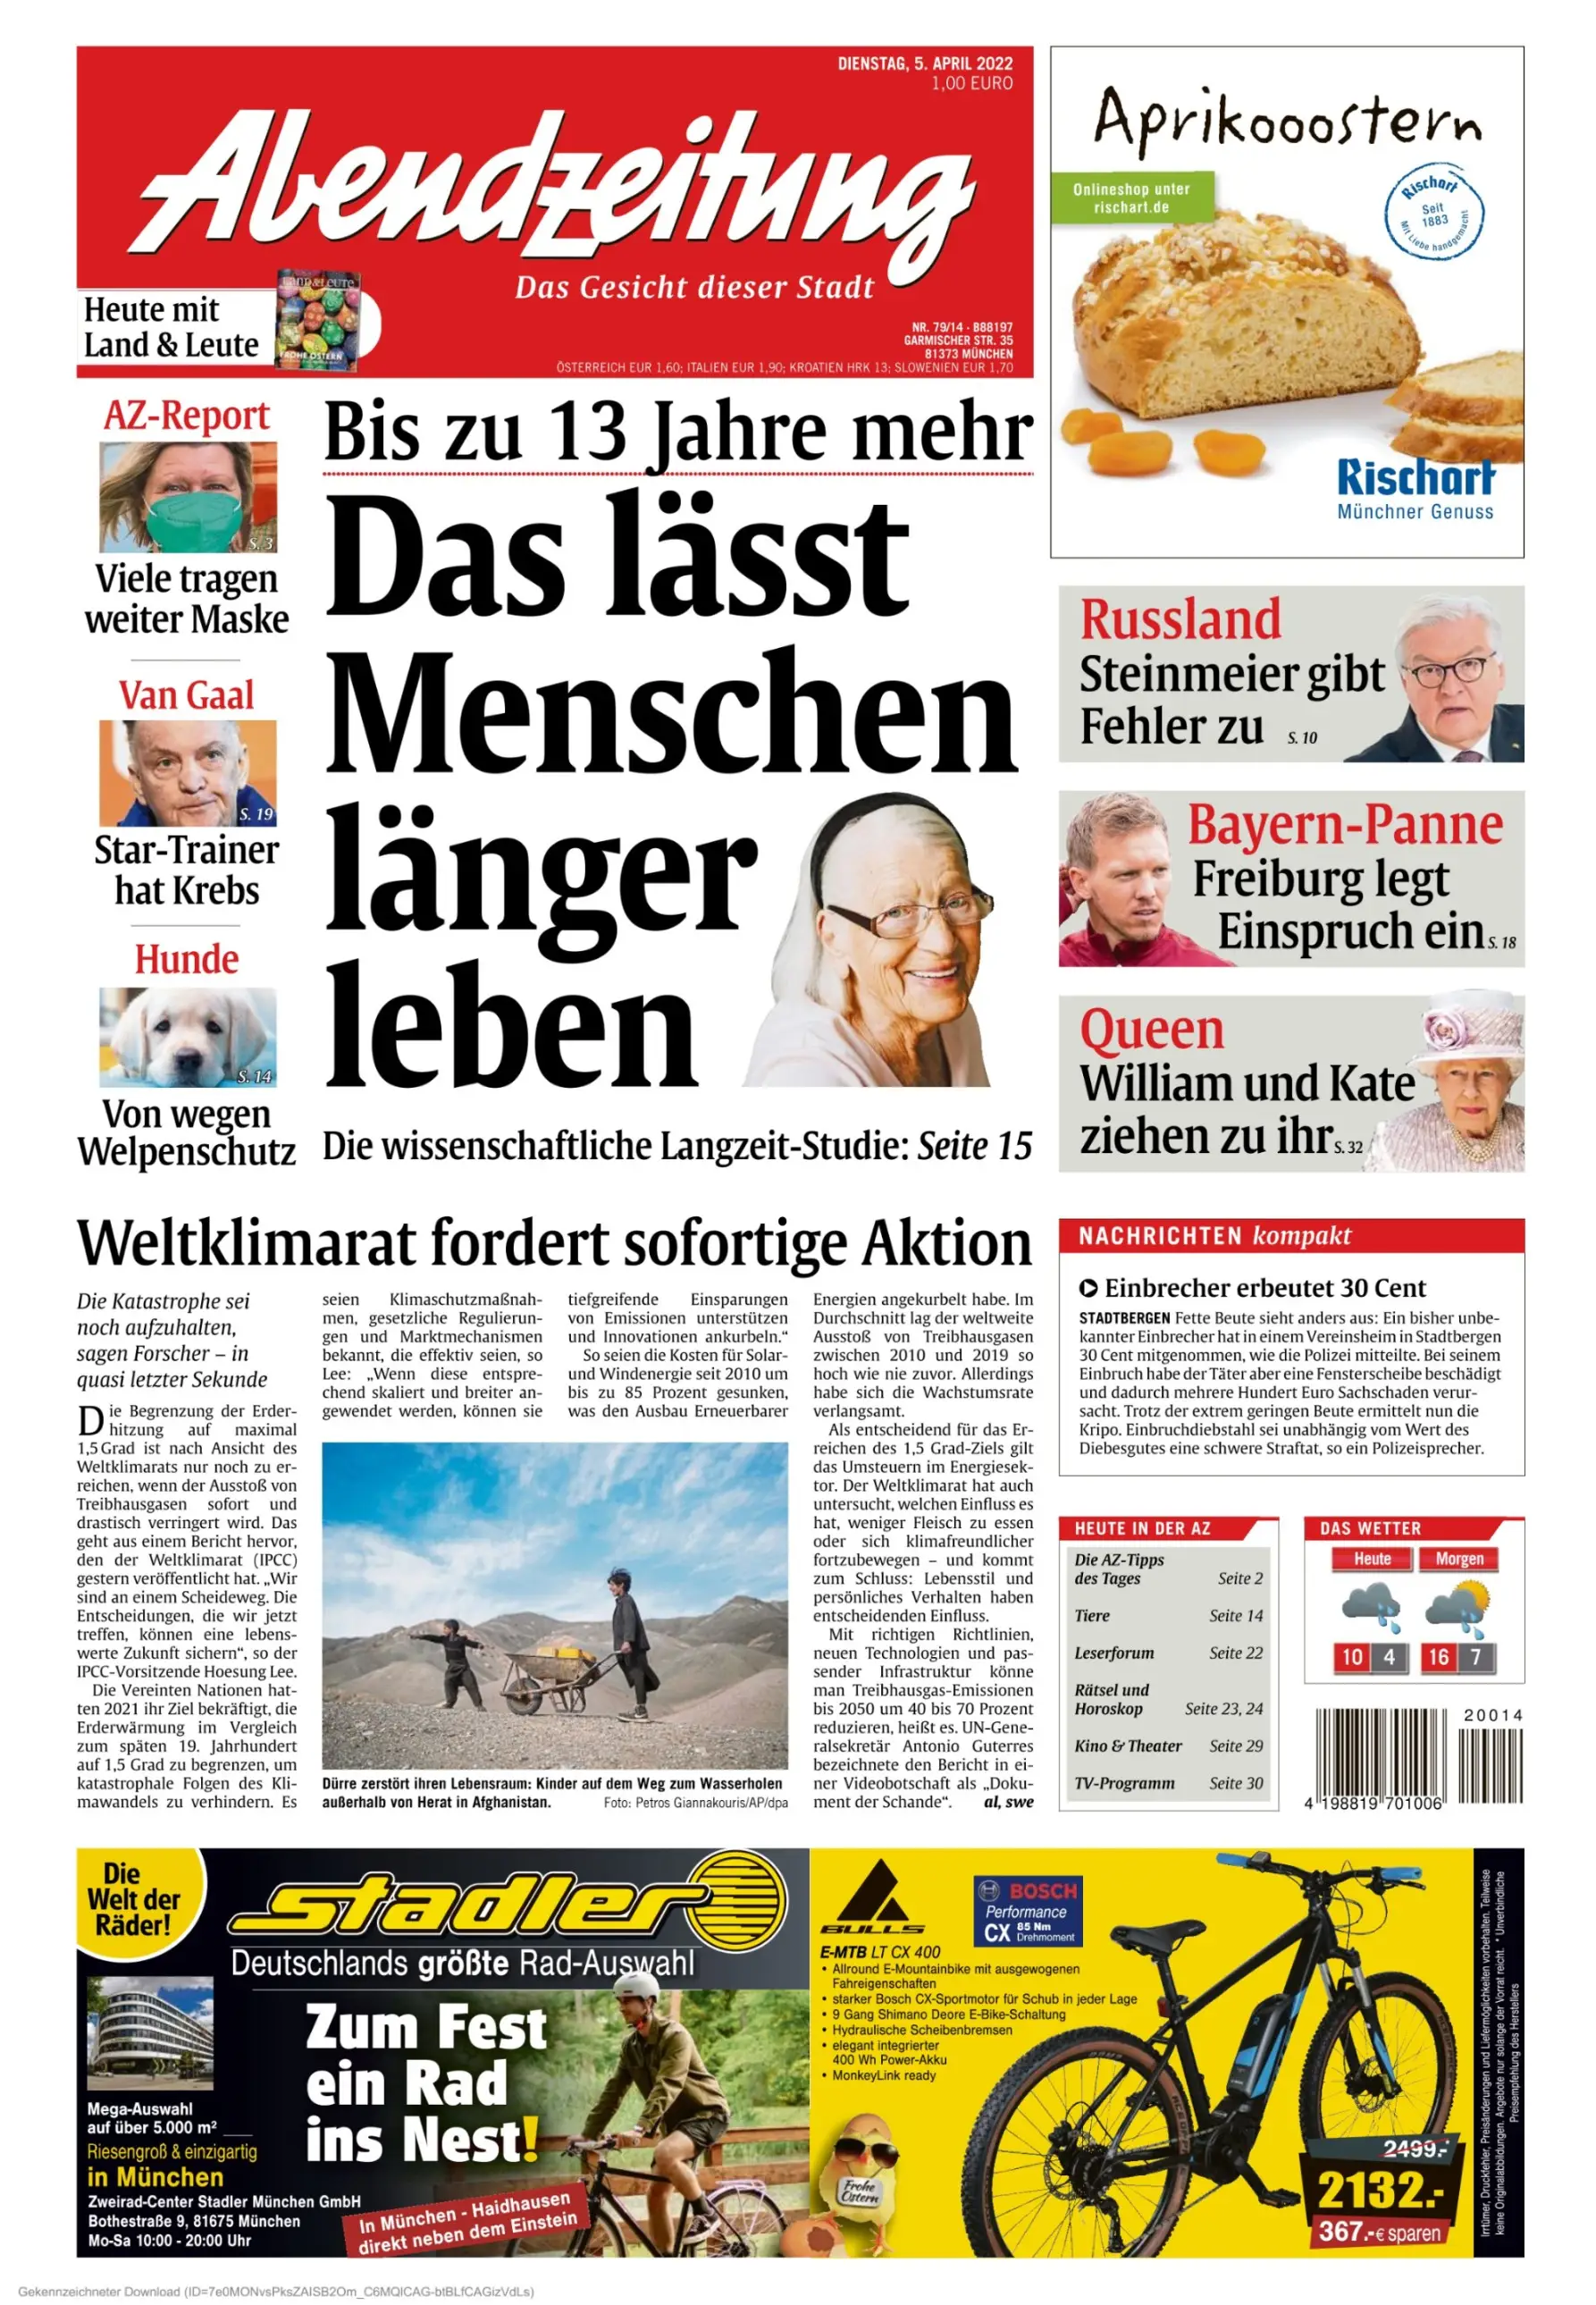 Abendzeitung Muenchen 05 April 2022 Avaxhome 